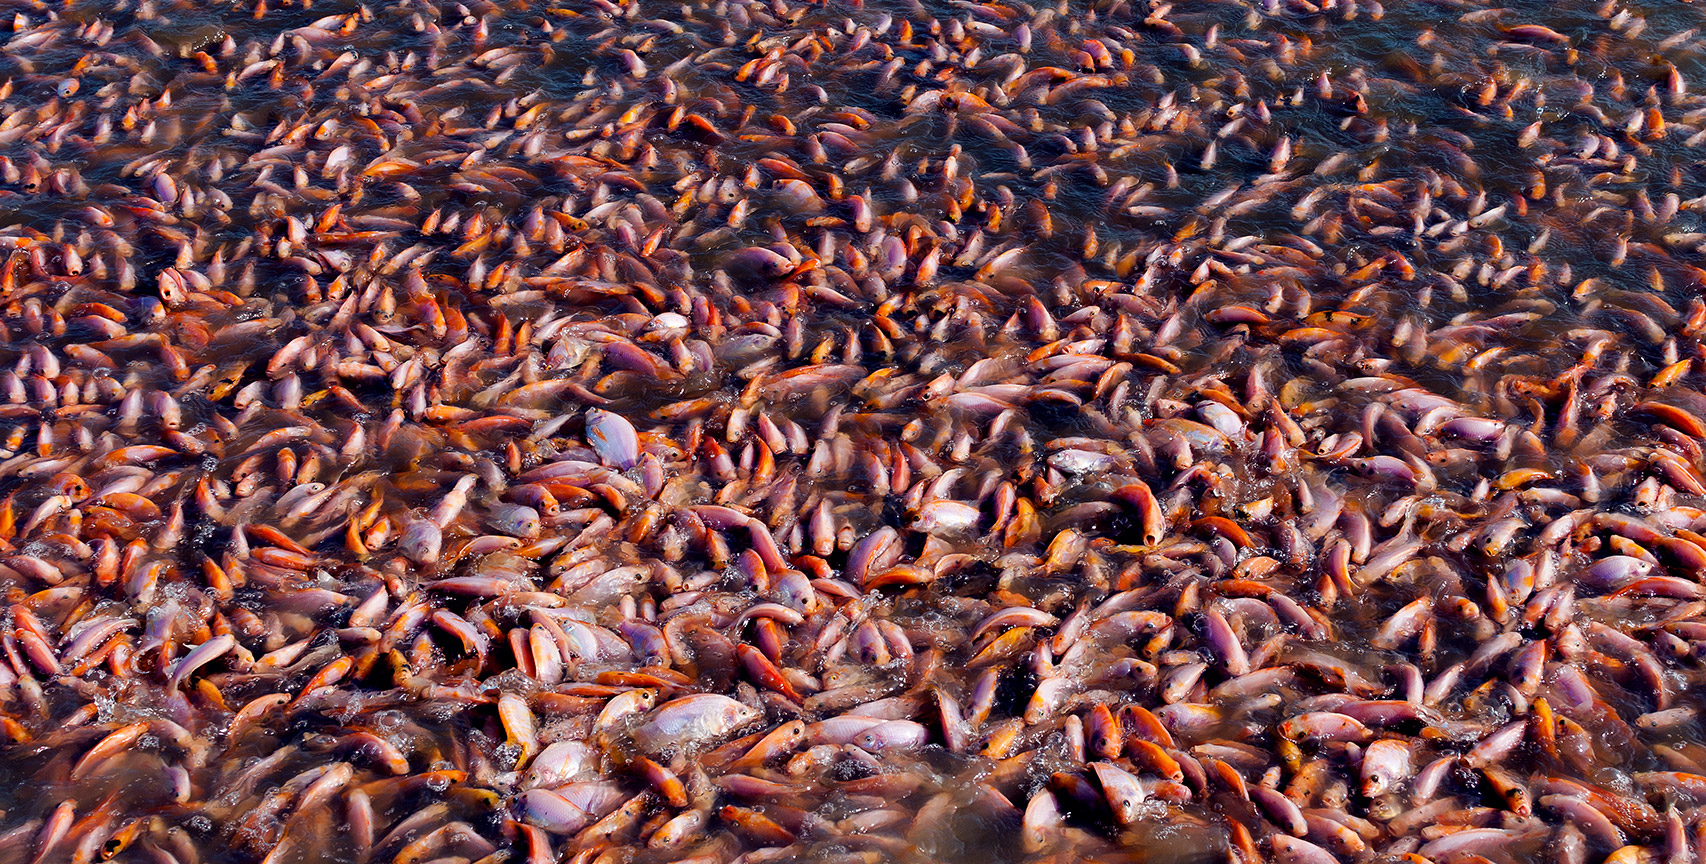 Fish farm, overcrowded